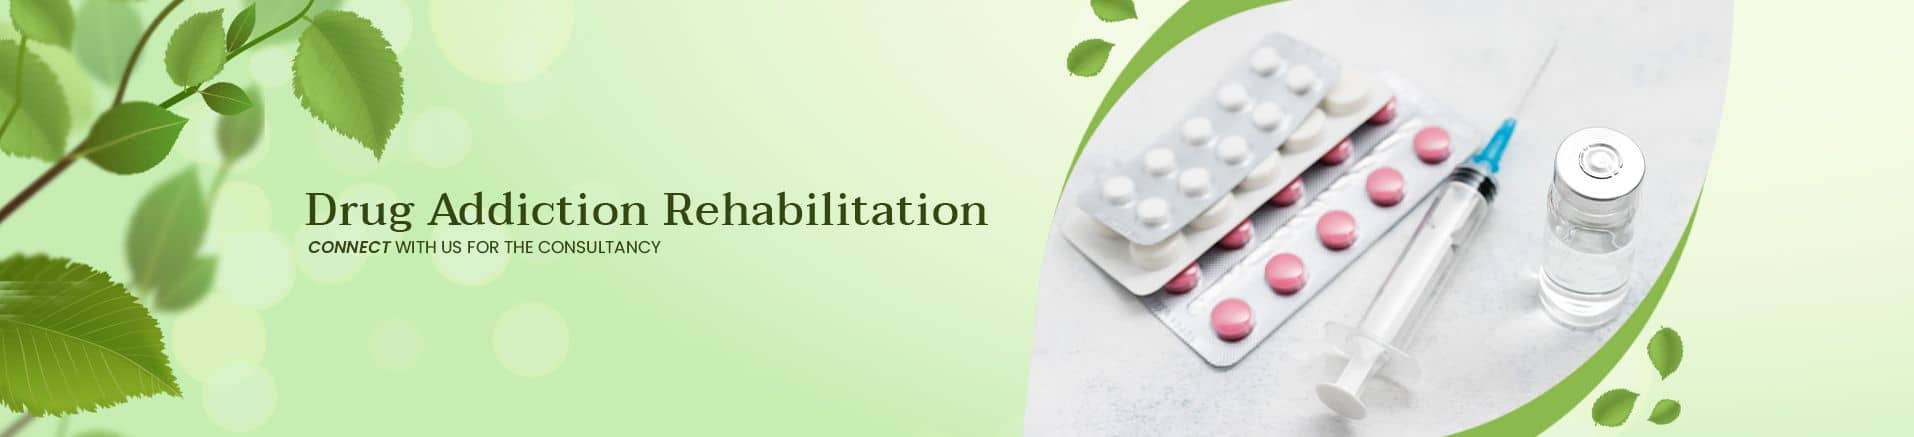 Drug Addiction Rehabilitation